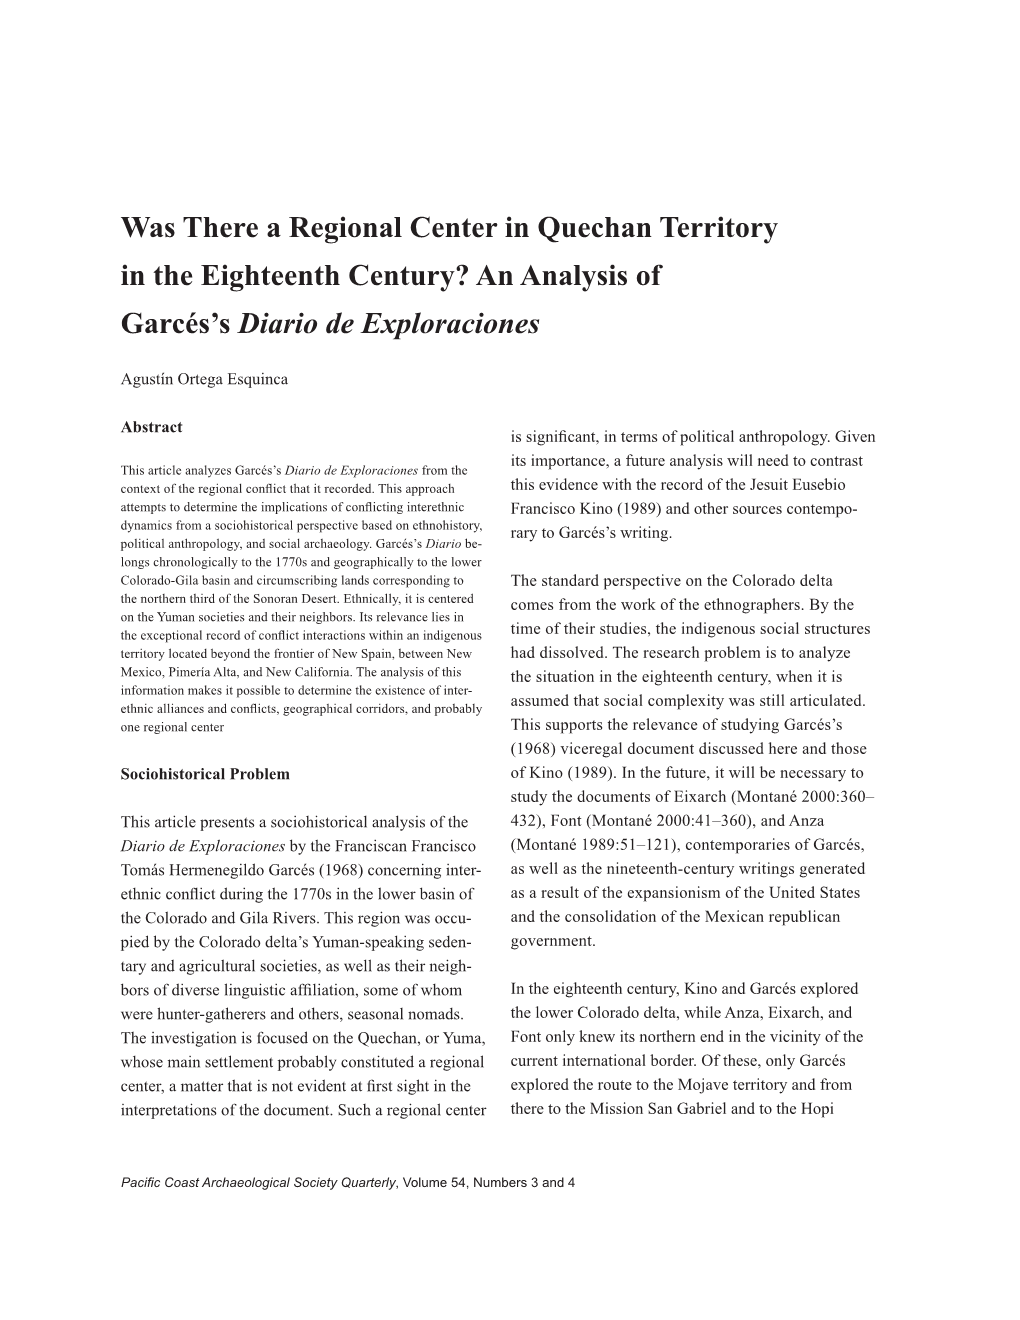 Was There a Regional Center in Quechan Territory in the Eighteenth Century? an Analysis of Garcés’S Diario De Exploraciones